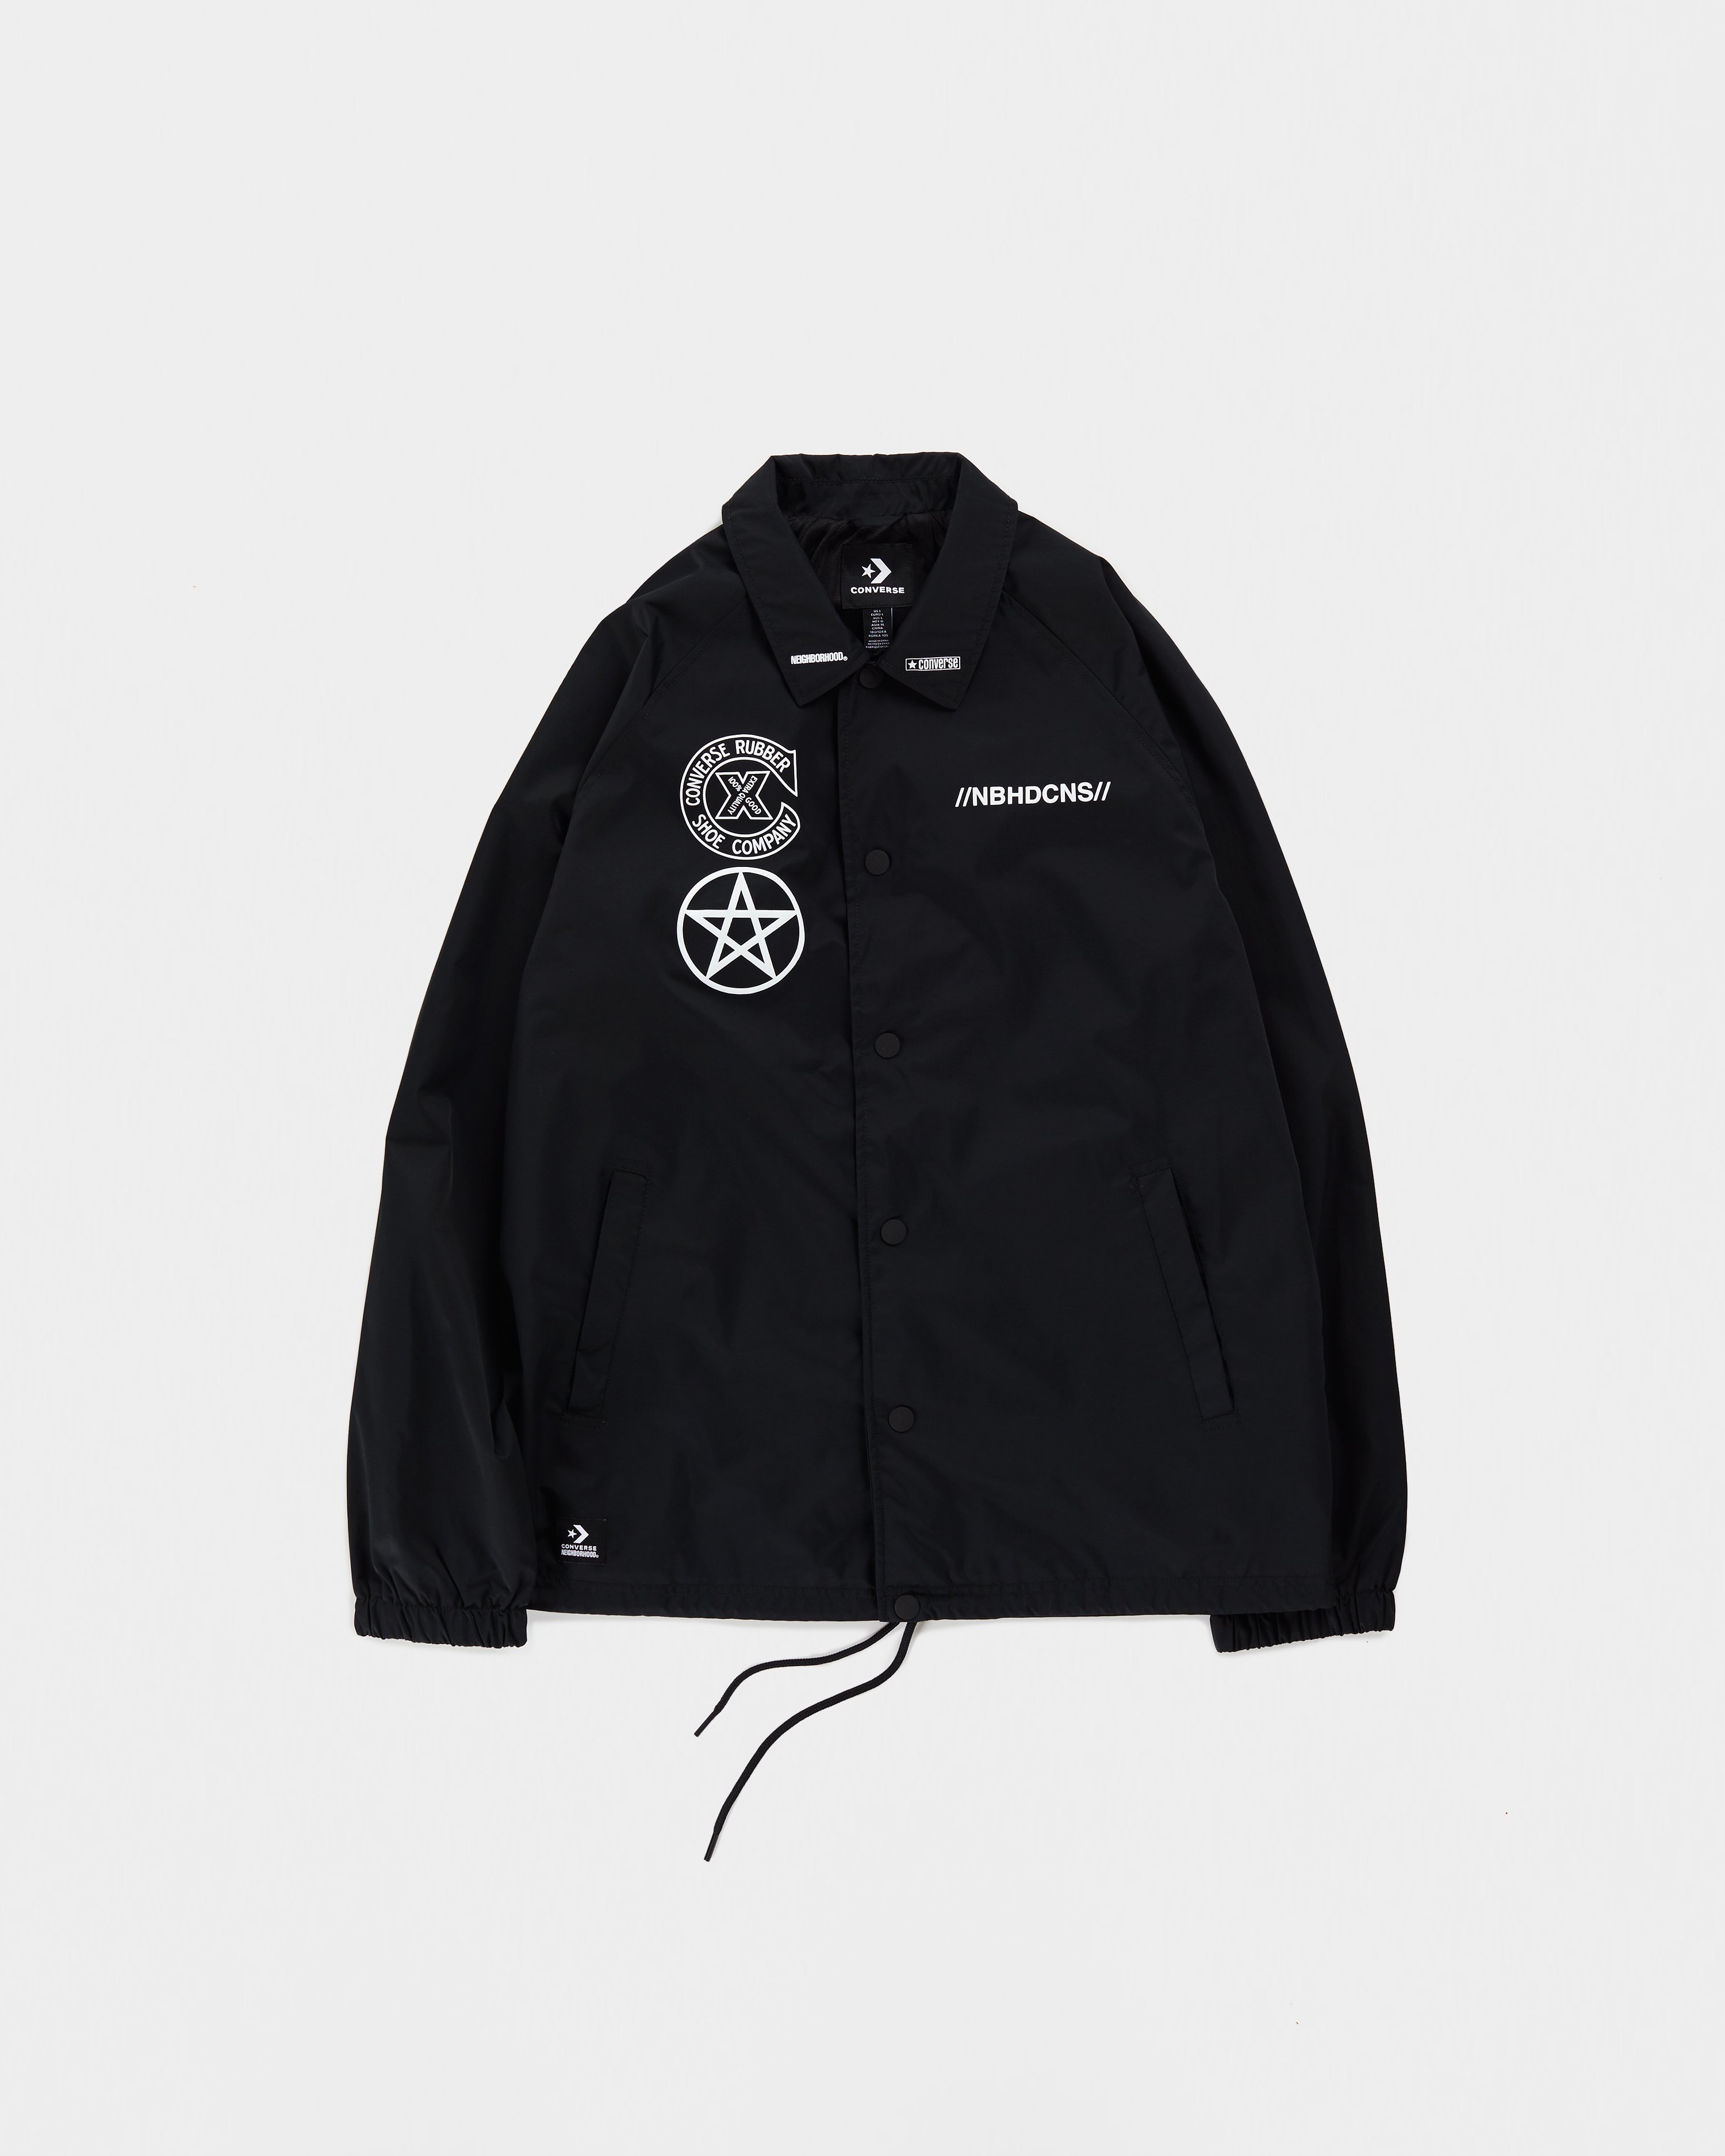 Converse x NBHD - Black Coaches Jacket - Clothing - Black - Image 1